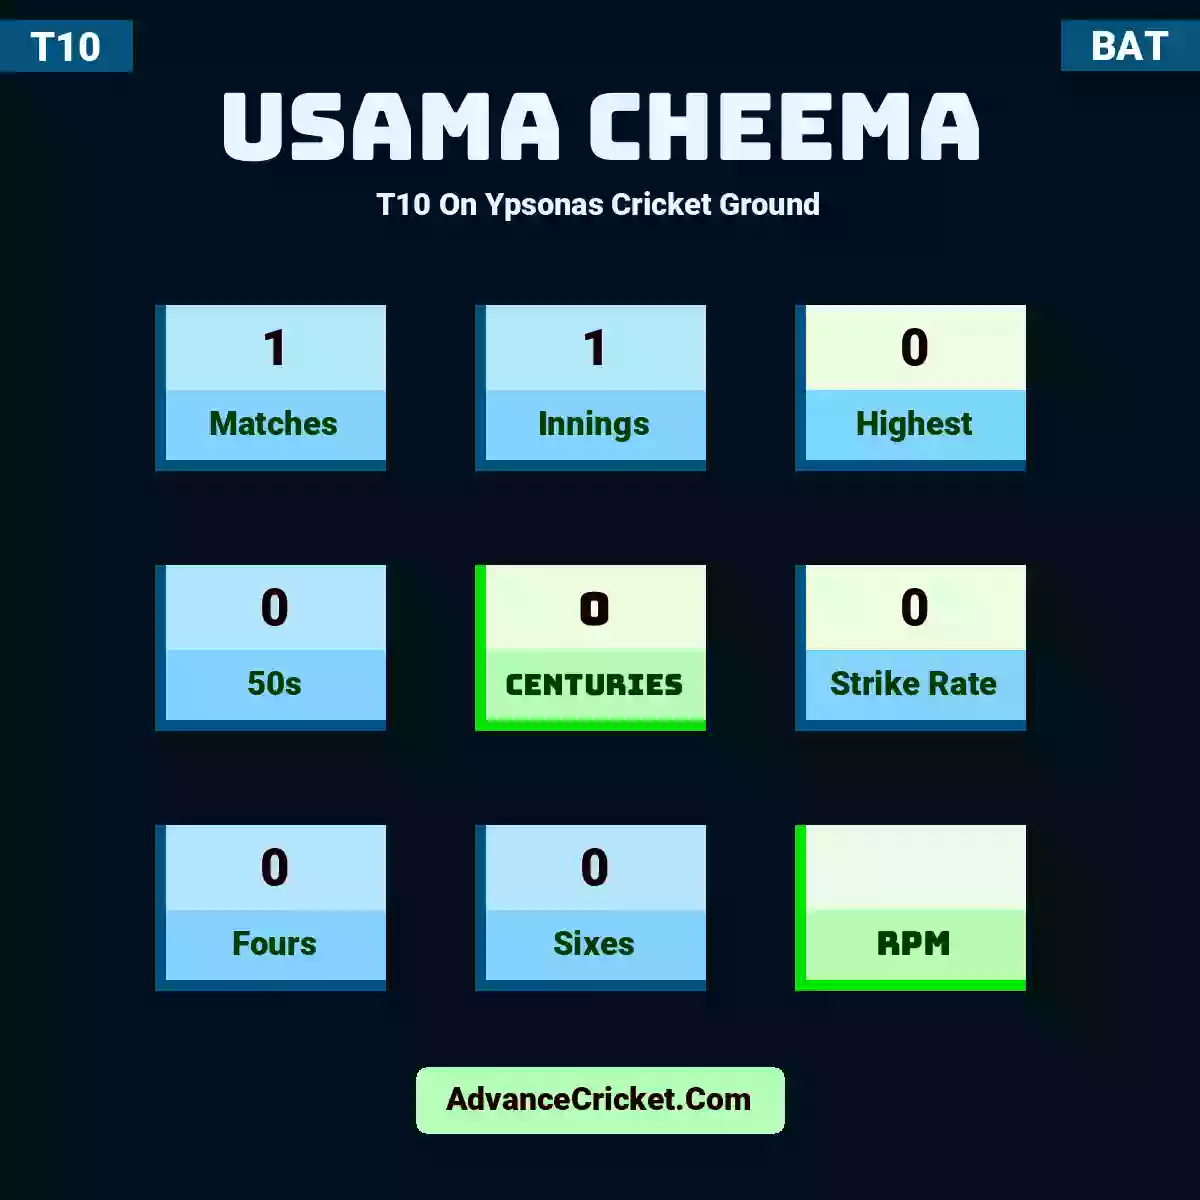 Usama Cheema T10  On Ypsonas Cricket Ground, Usama Cheema played 1 matches, scored 0 runs as highest, 0 half-centuries, and 0 centuries, with a strike rate of 0. U.Cheema hit 0 fours and 0 sixes.